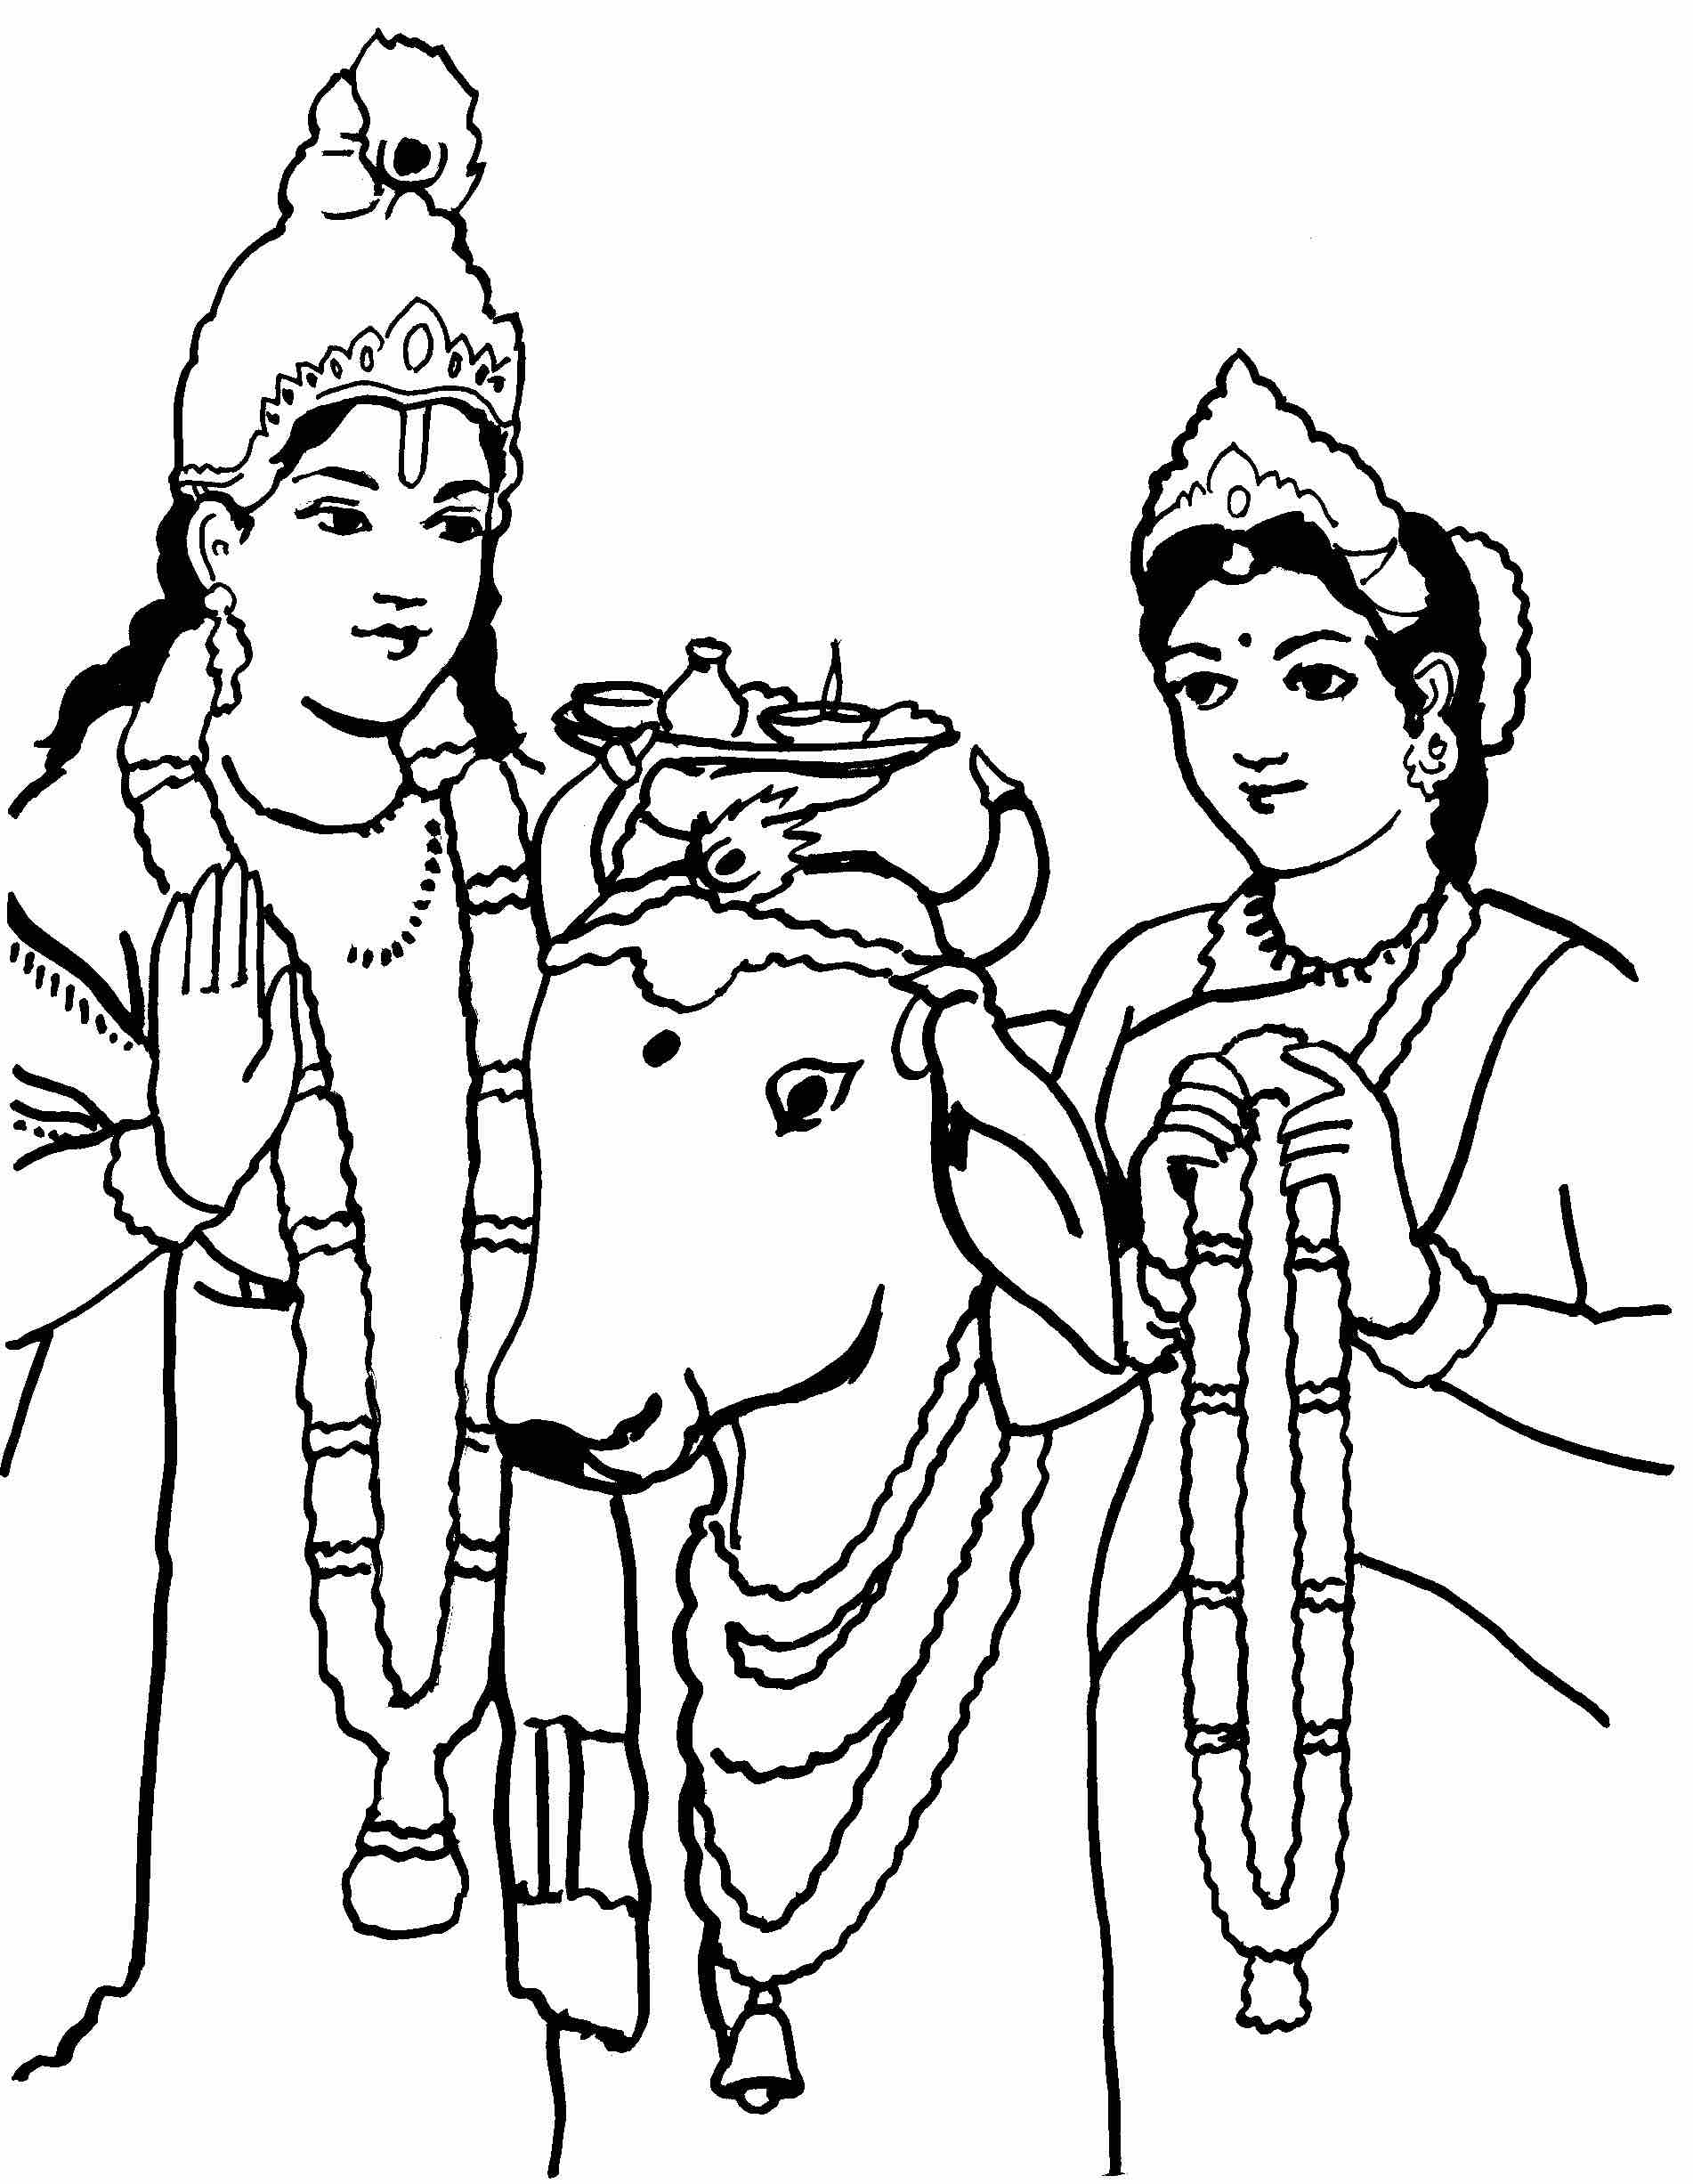 Gau Pooja - Cow Prayers